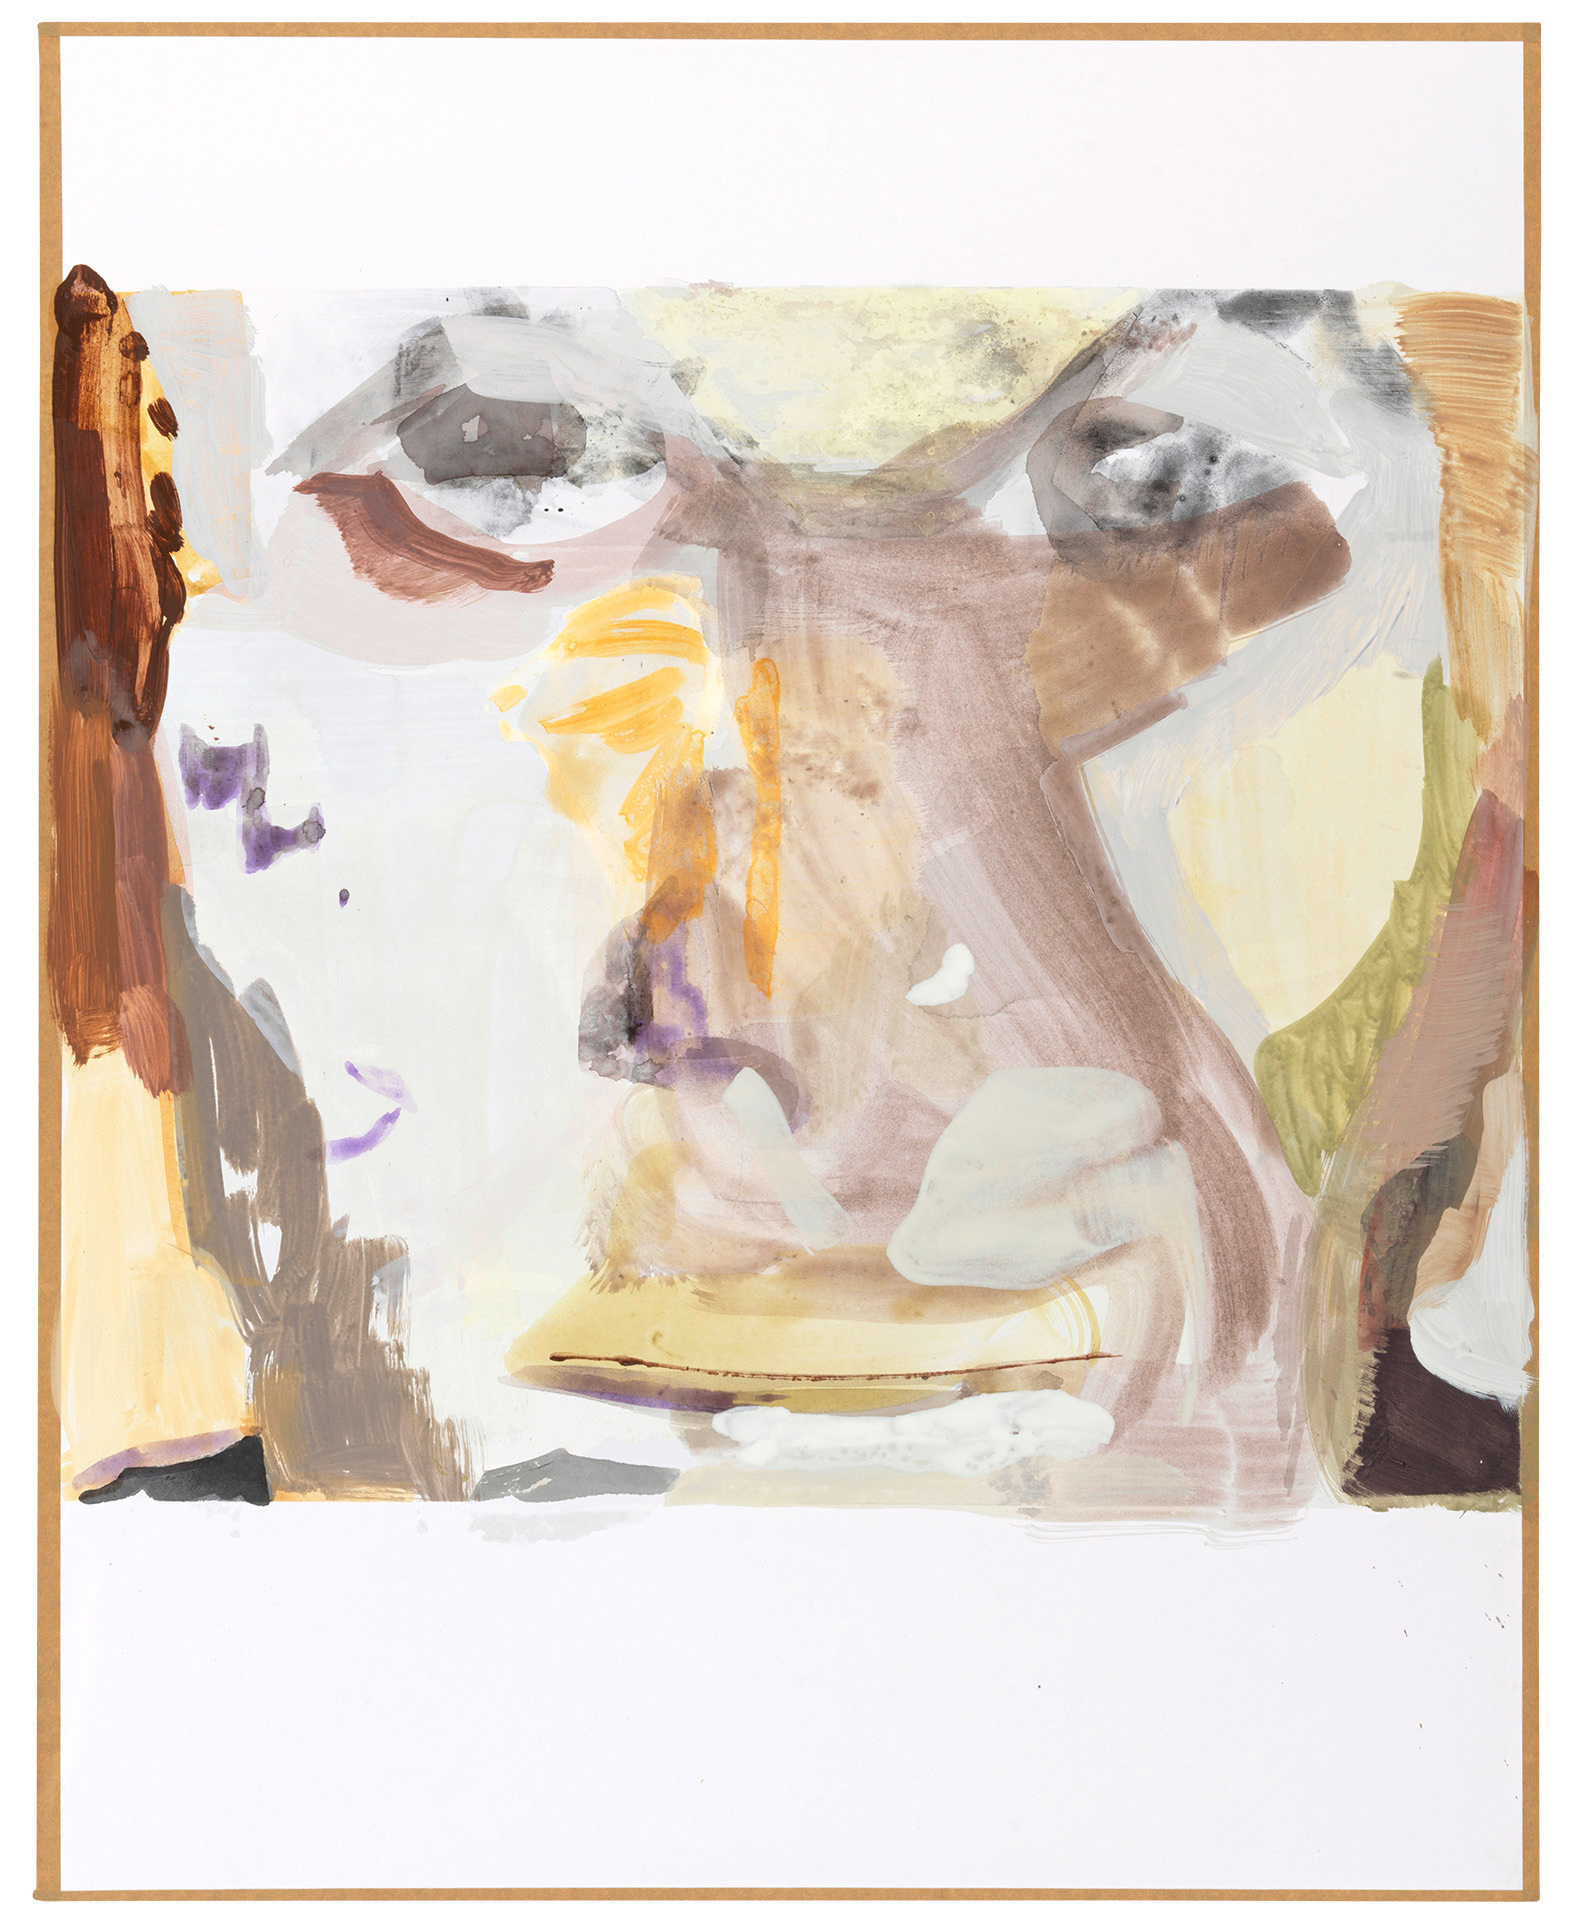 Maki Na Kamura, peterdoig, 2020, water and oil on paper, 100 x 80 cm